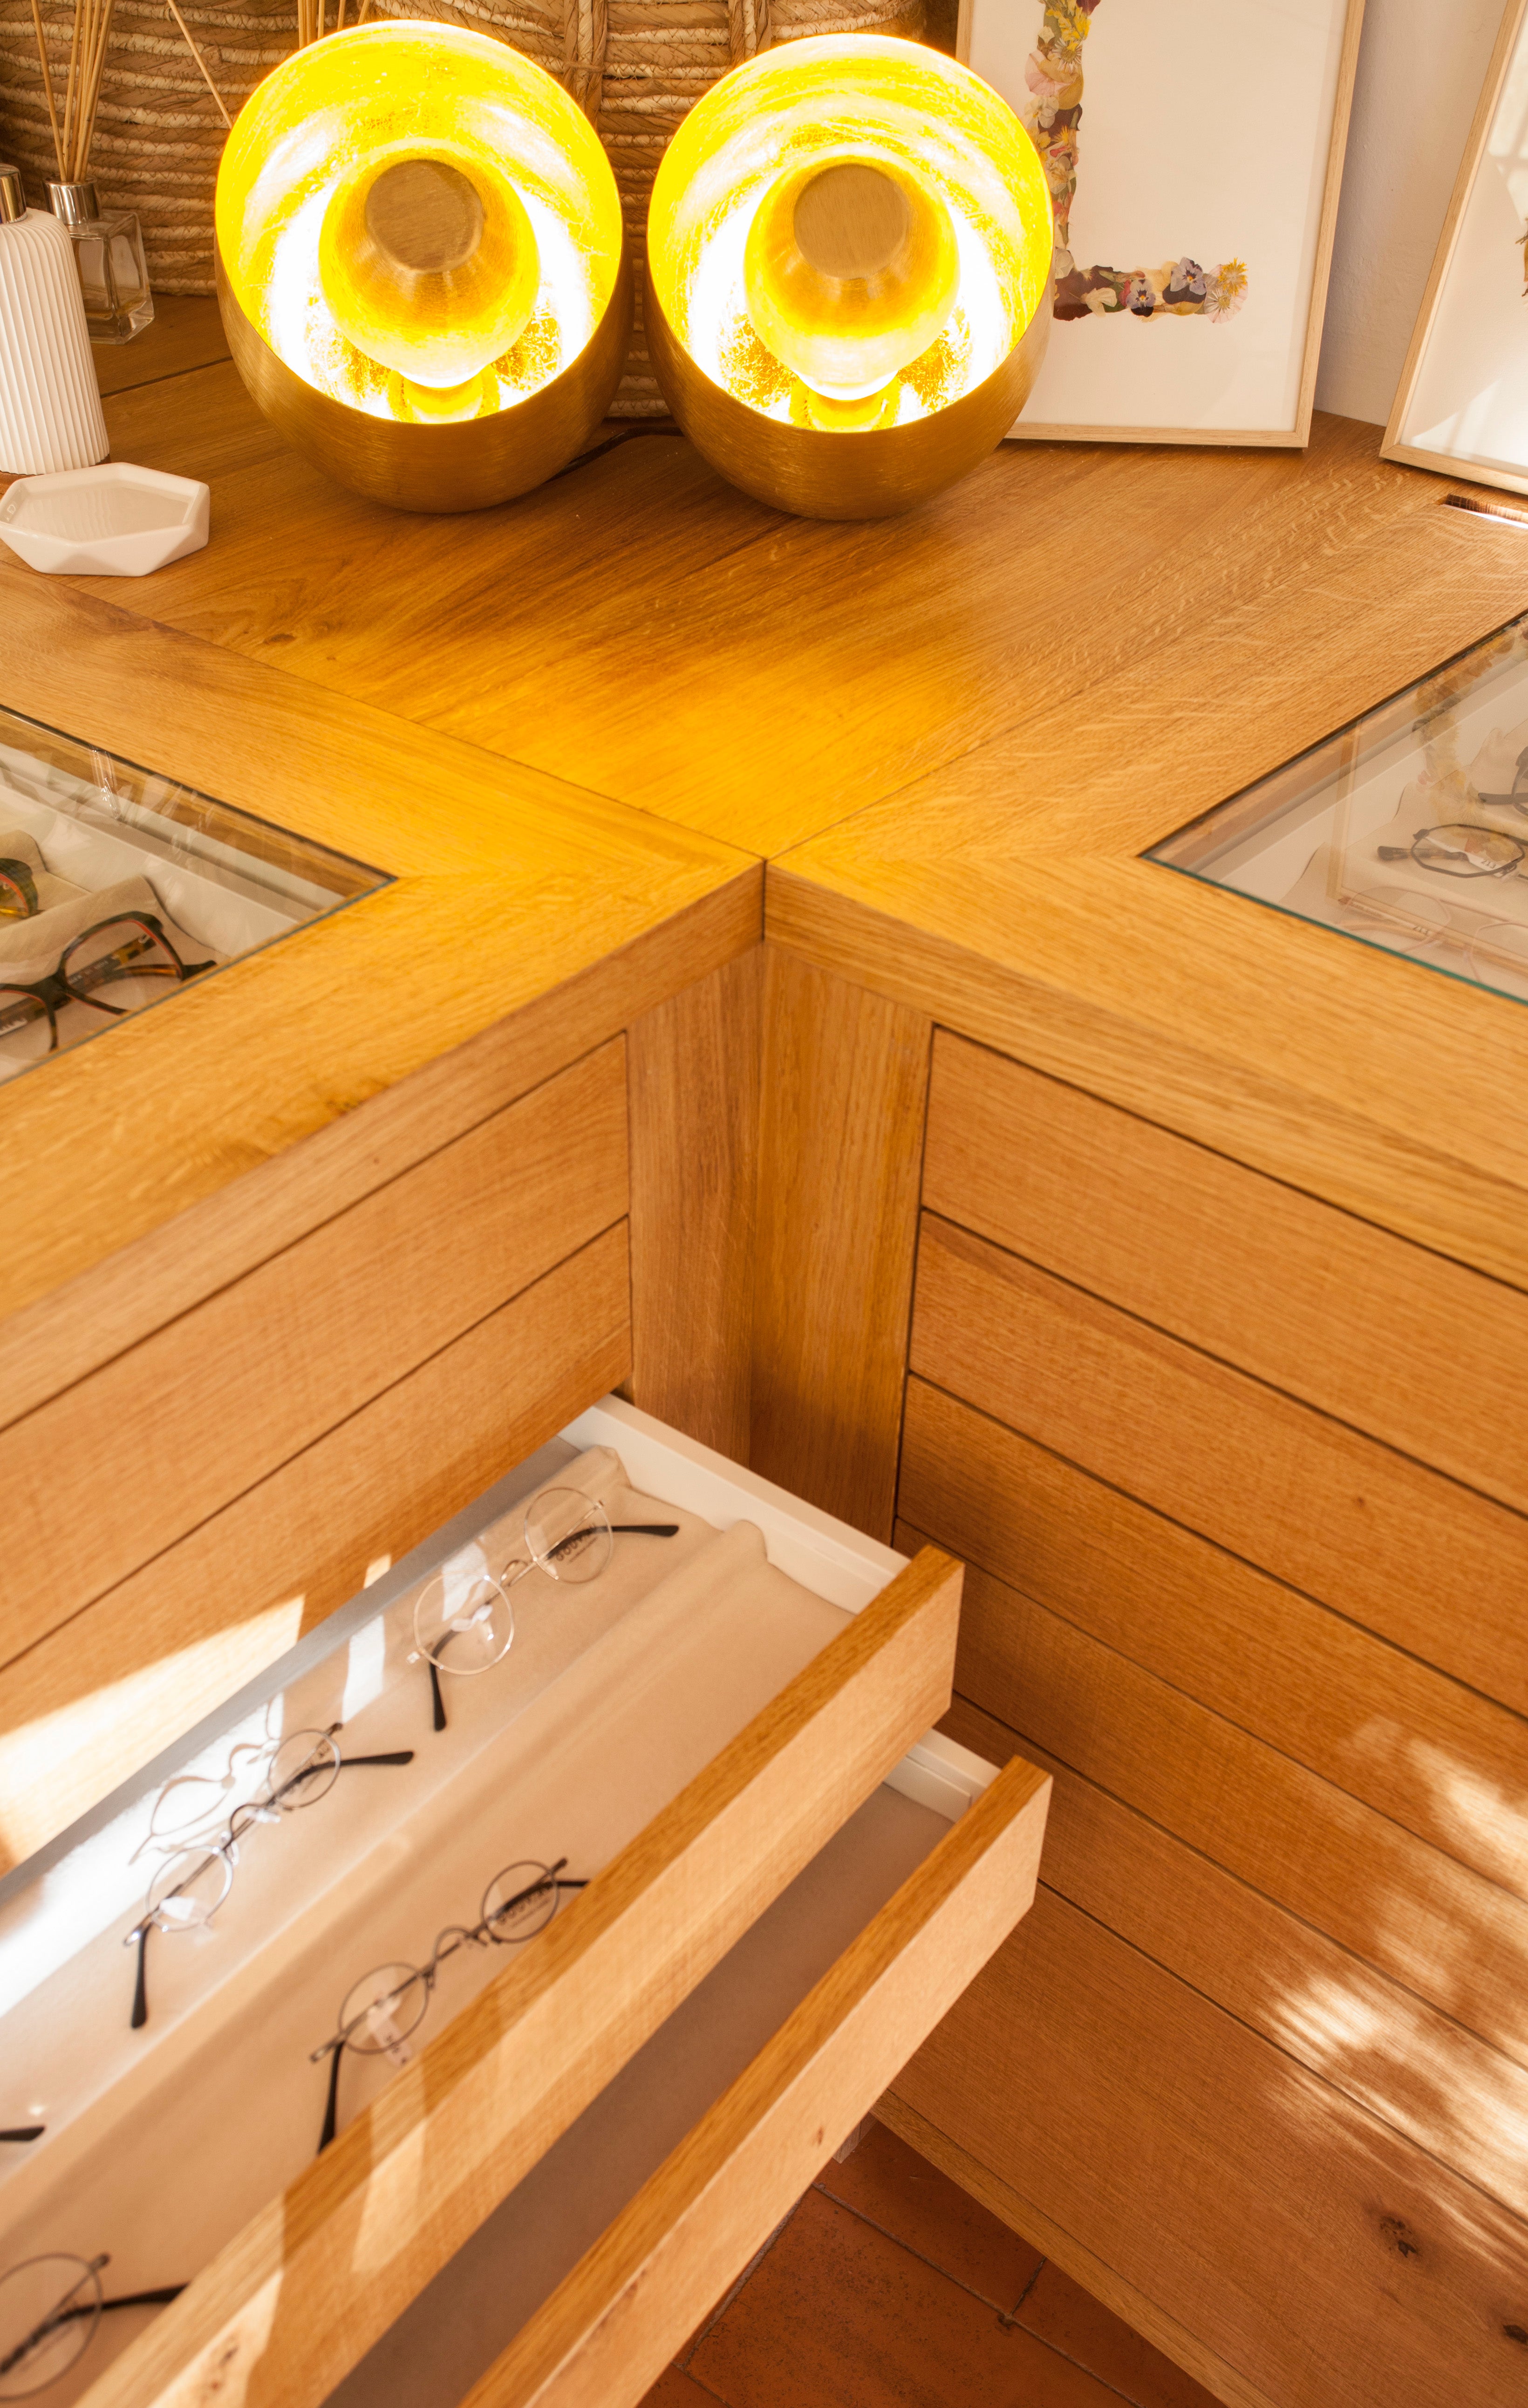 custom-made cabinets - optician - oak natural vivace oak - veneer - veneer cabinets - oak veneer cabinets - Querkus